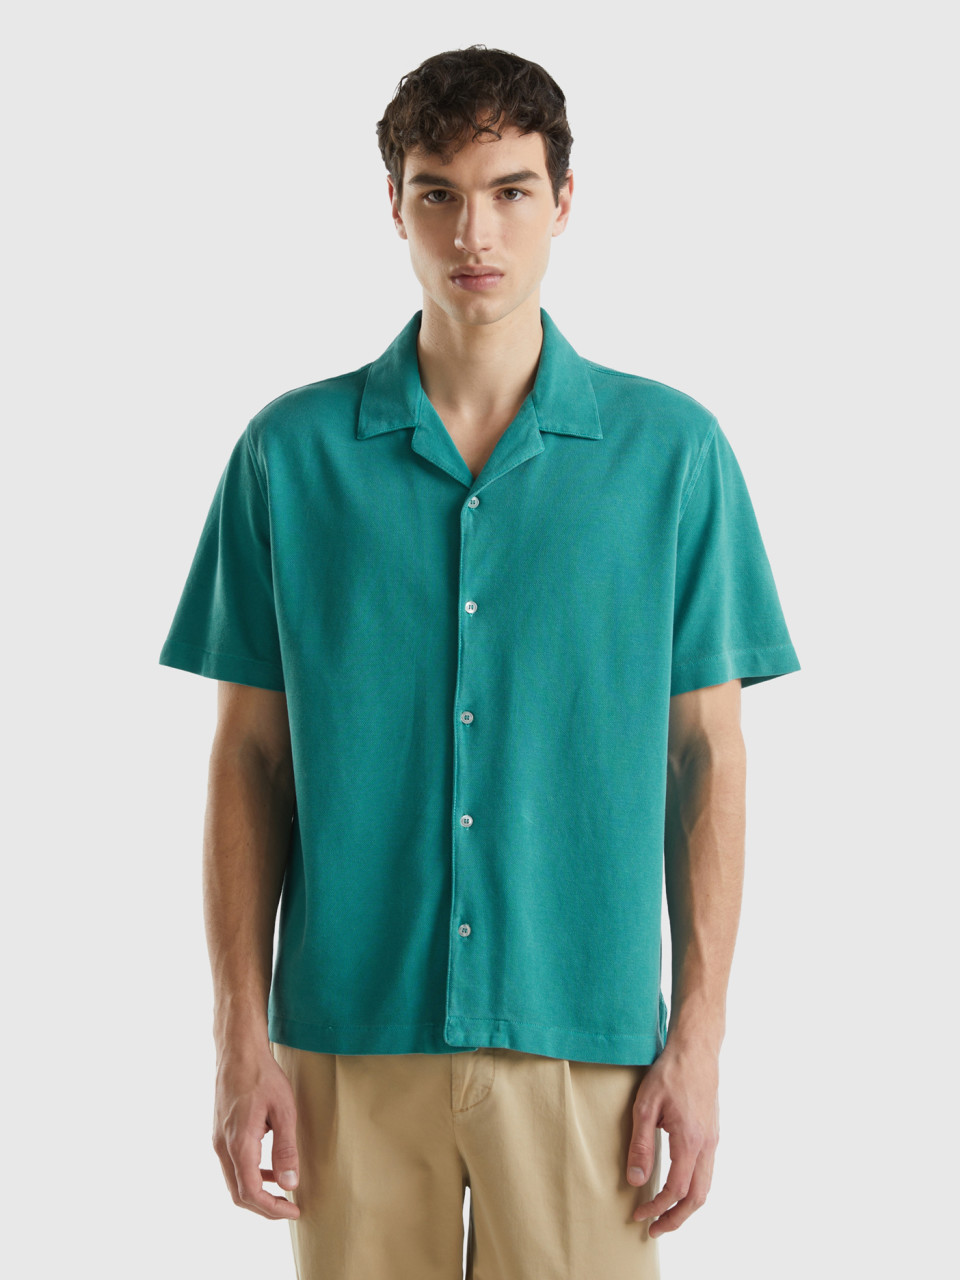 Benetton, Organic Cotton Pique Shirt, Teal, Men